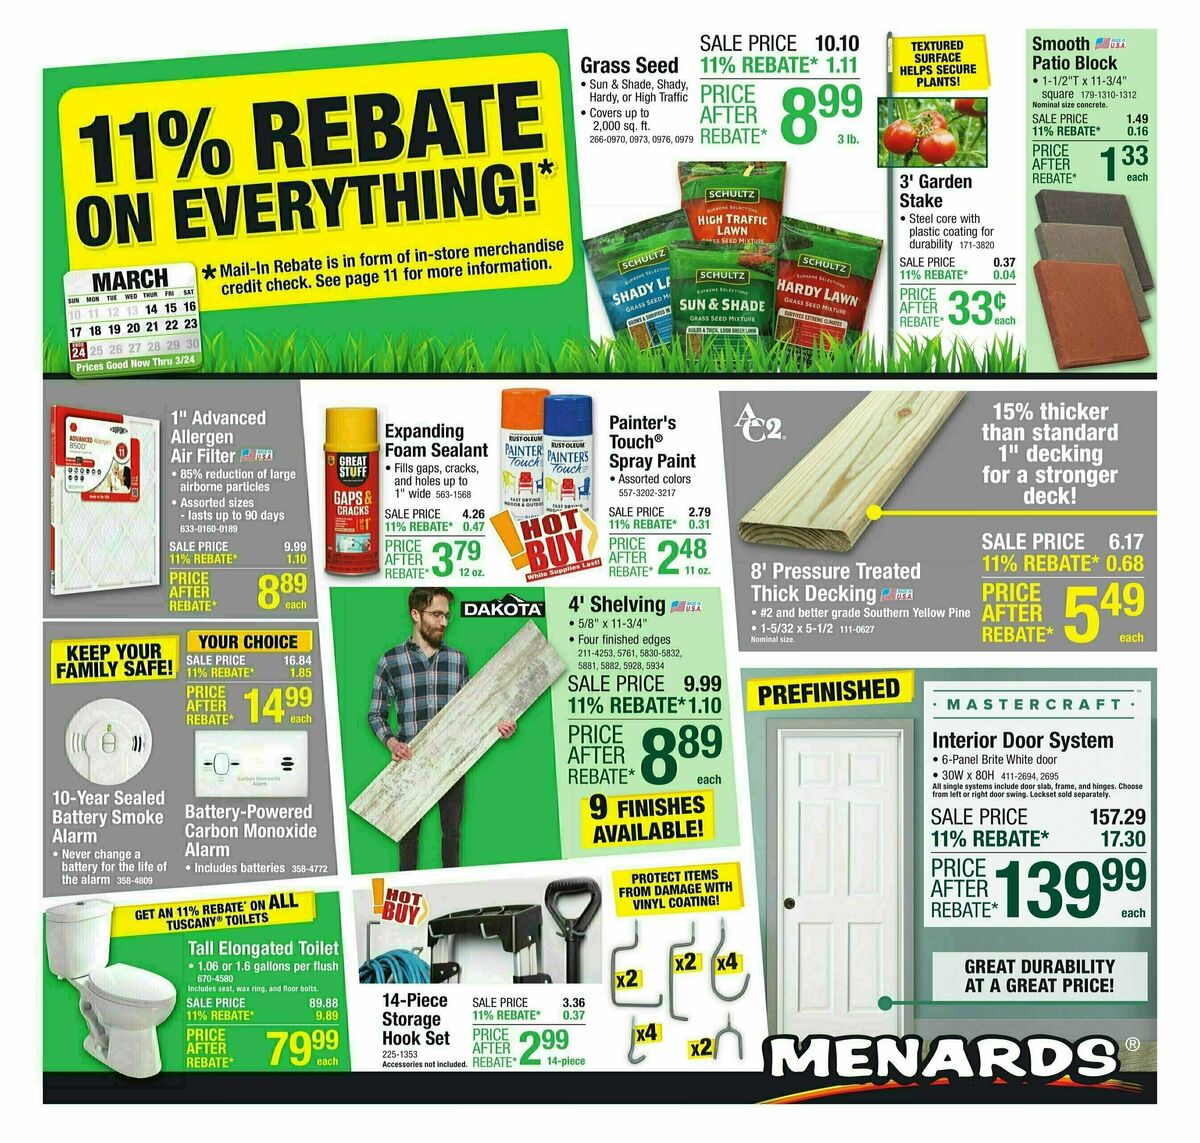 Menards 11% Rebate Sale Weekly Ad from March 13